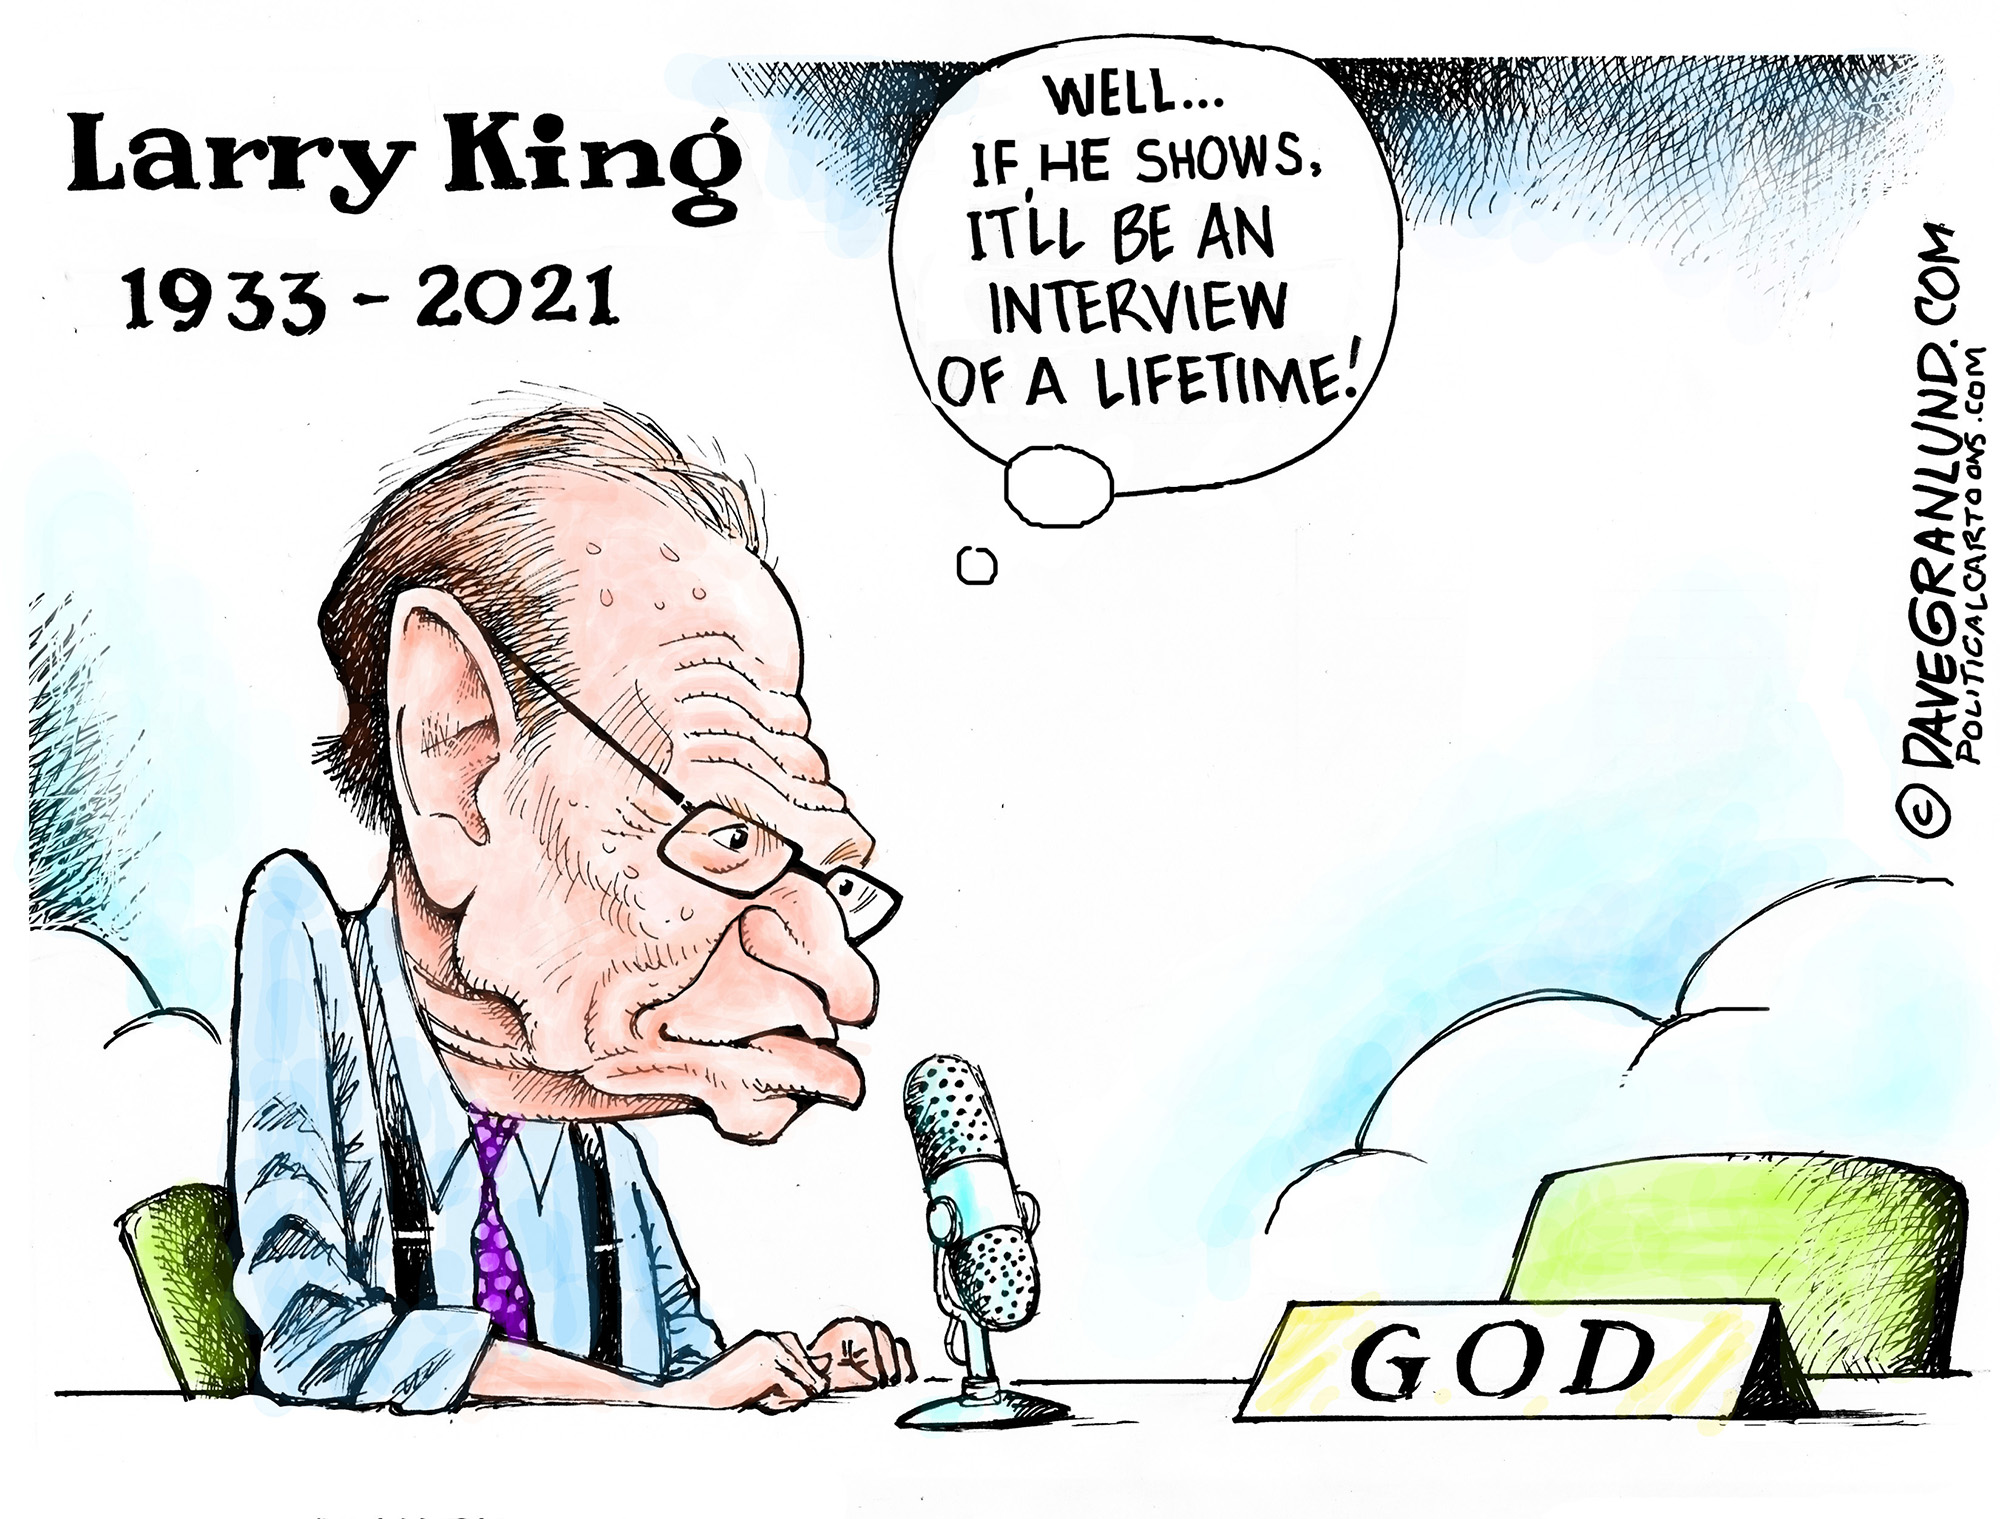 Larry King 1933-2021